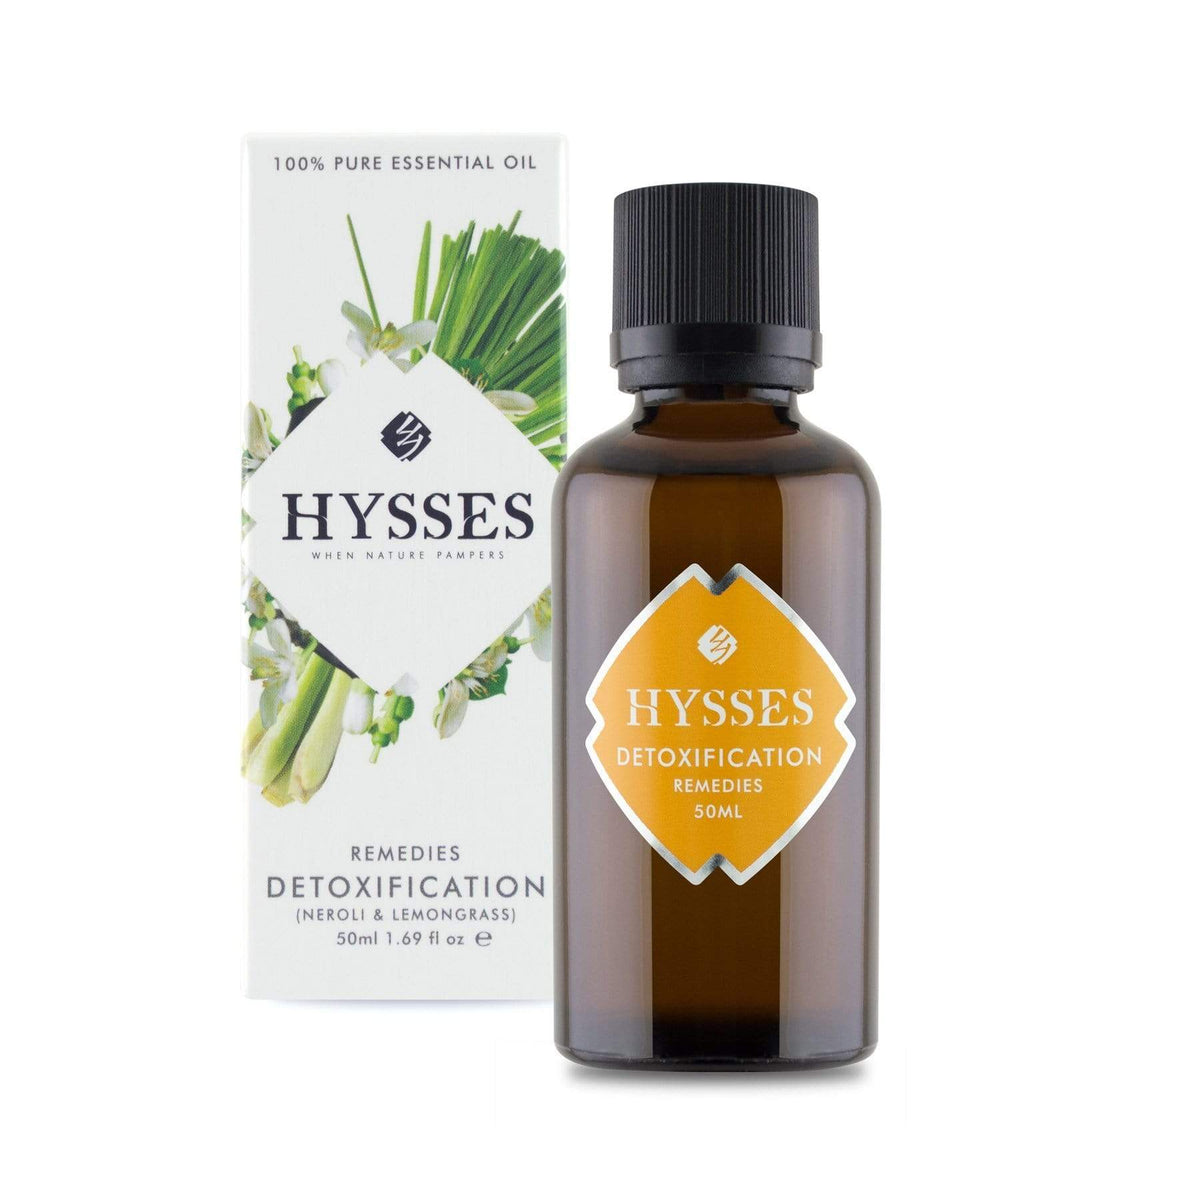 Hysses Essential Oil 50ml Remedies, Detoxification